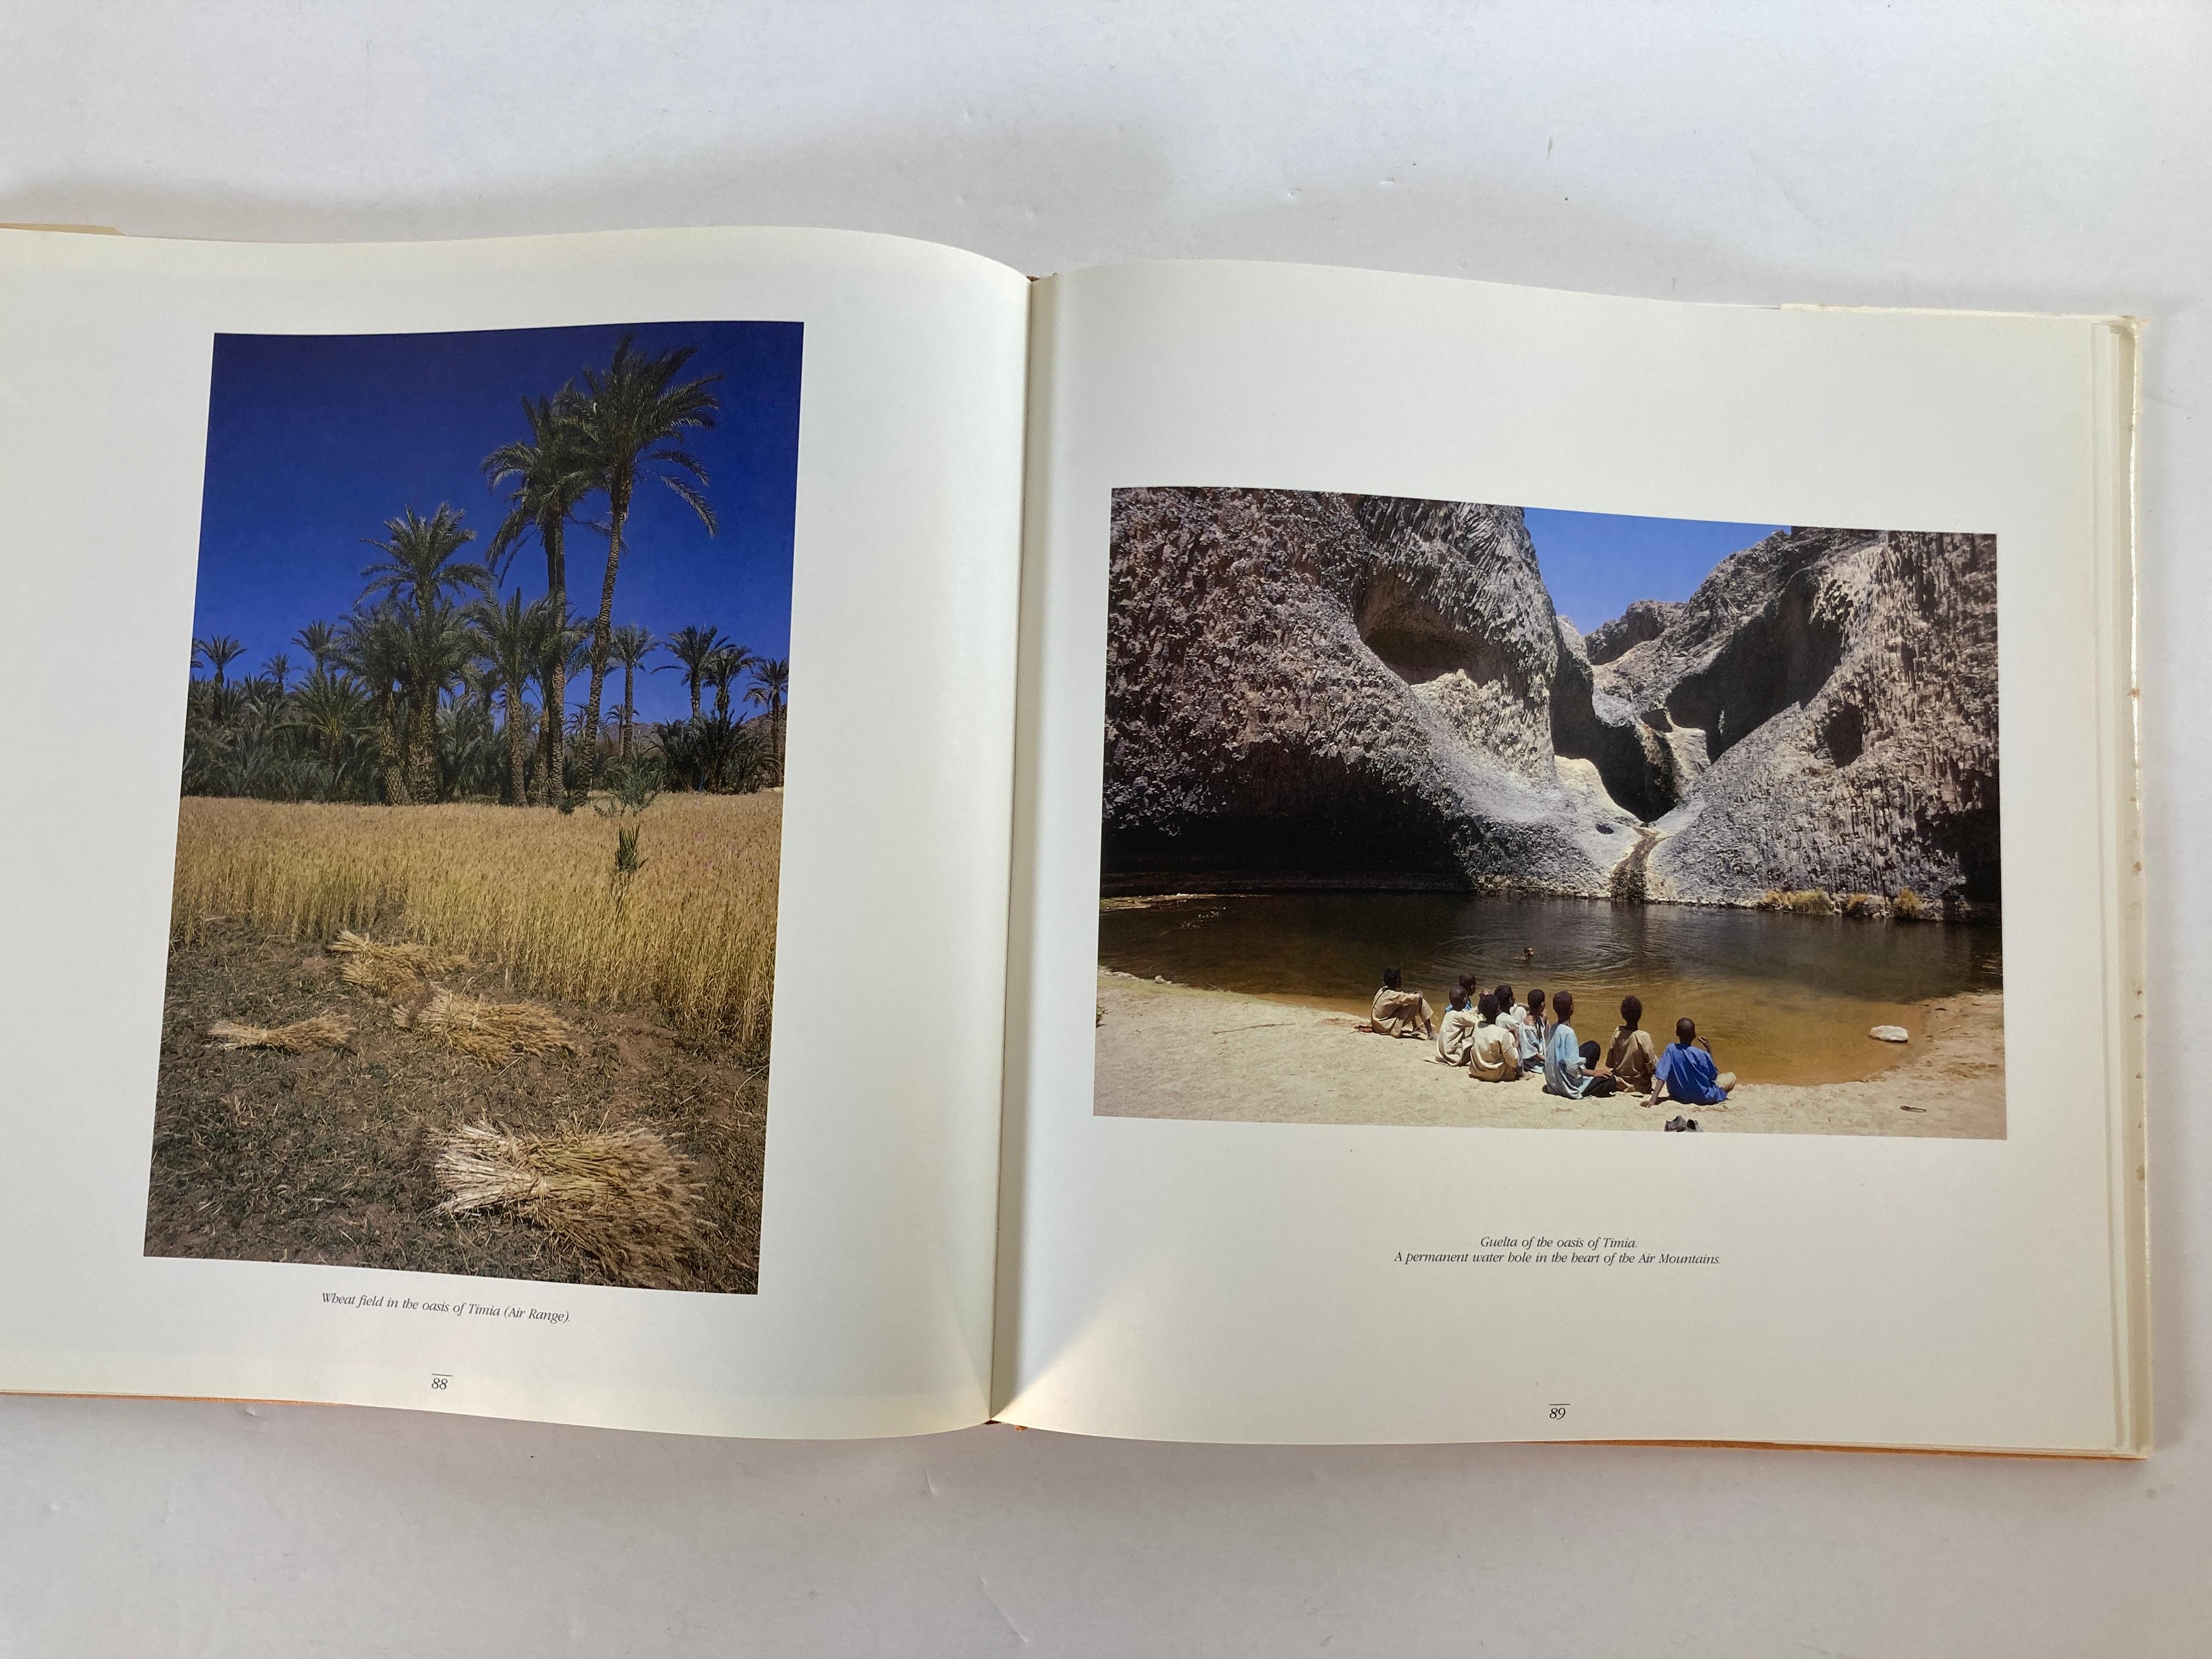 SAHARA Magic Desert Hardcover Book 3